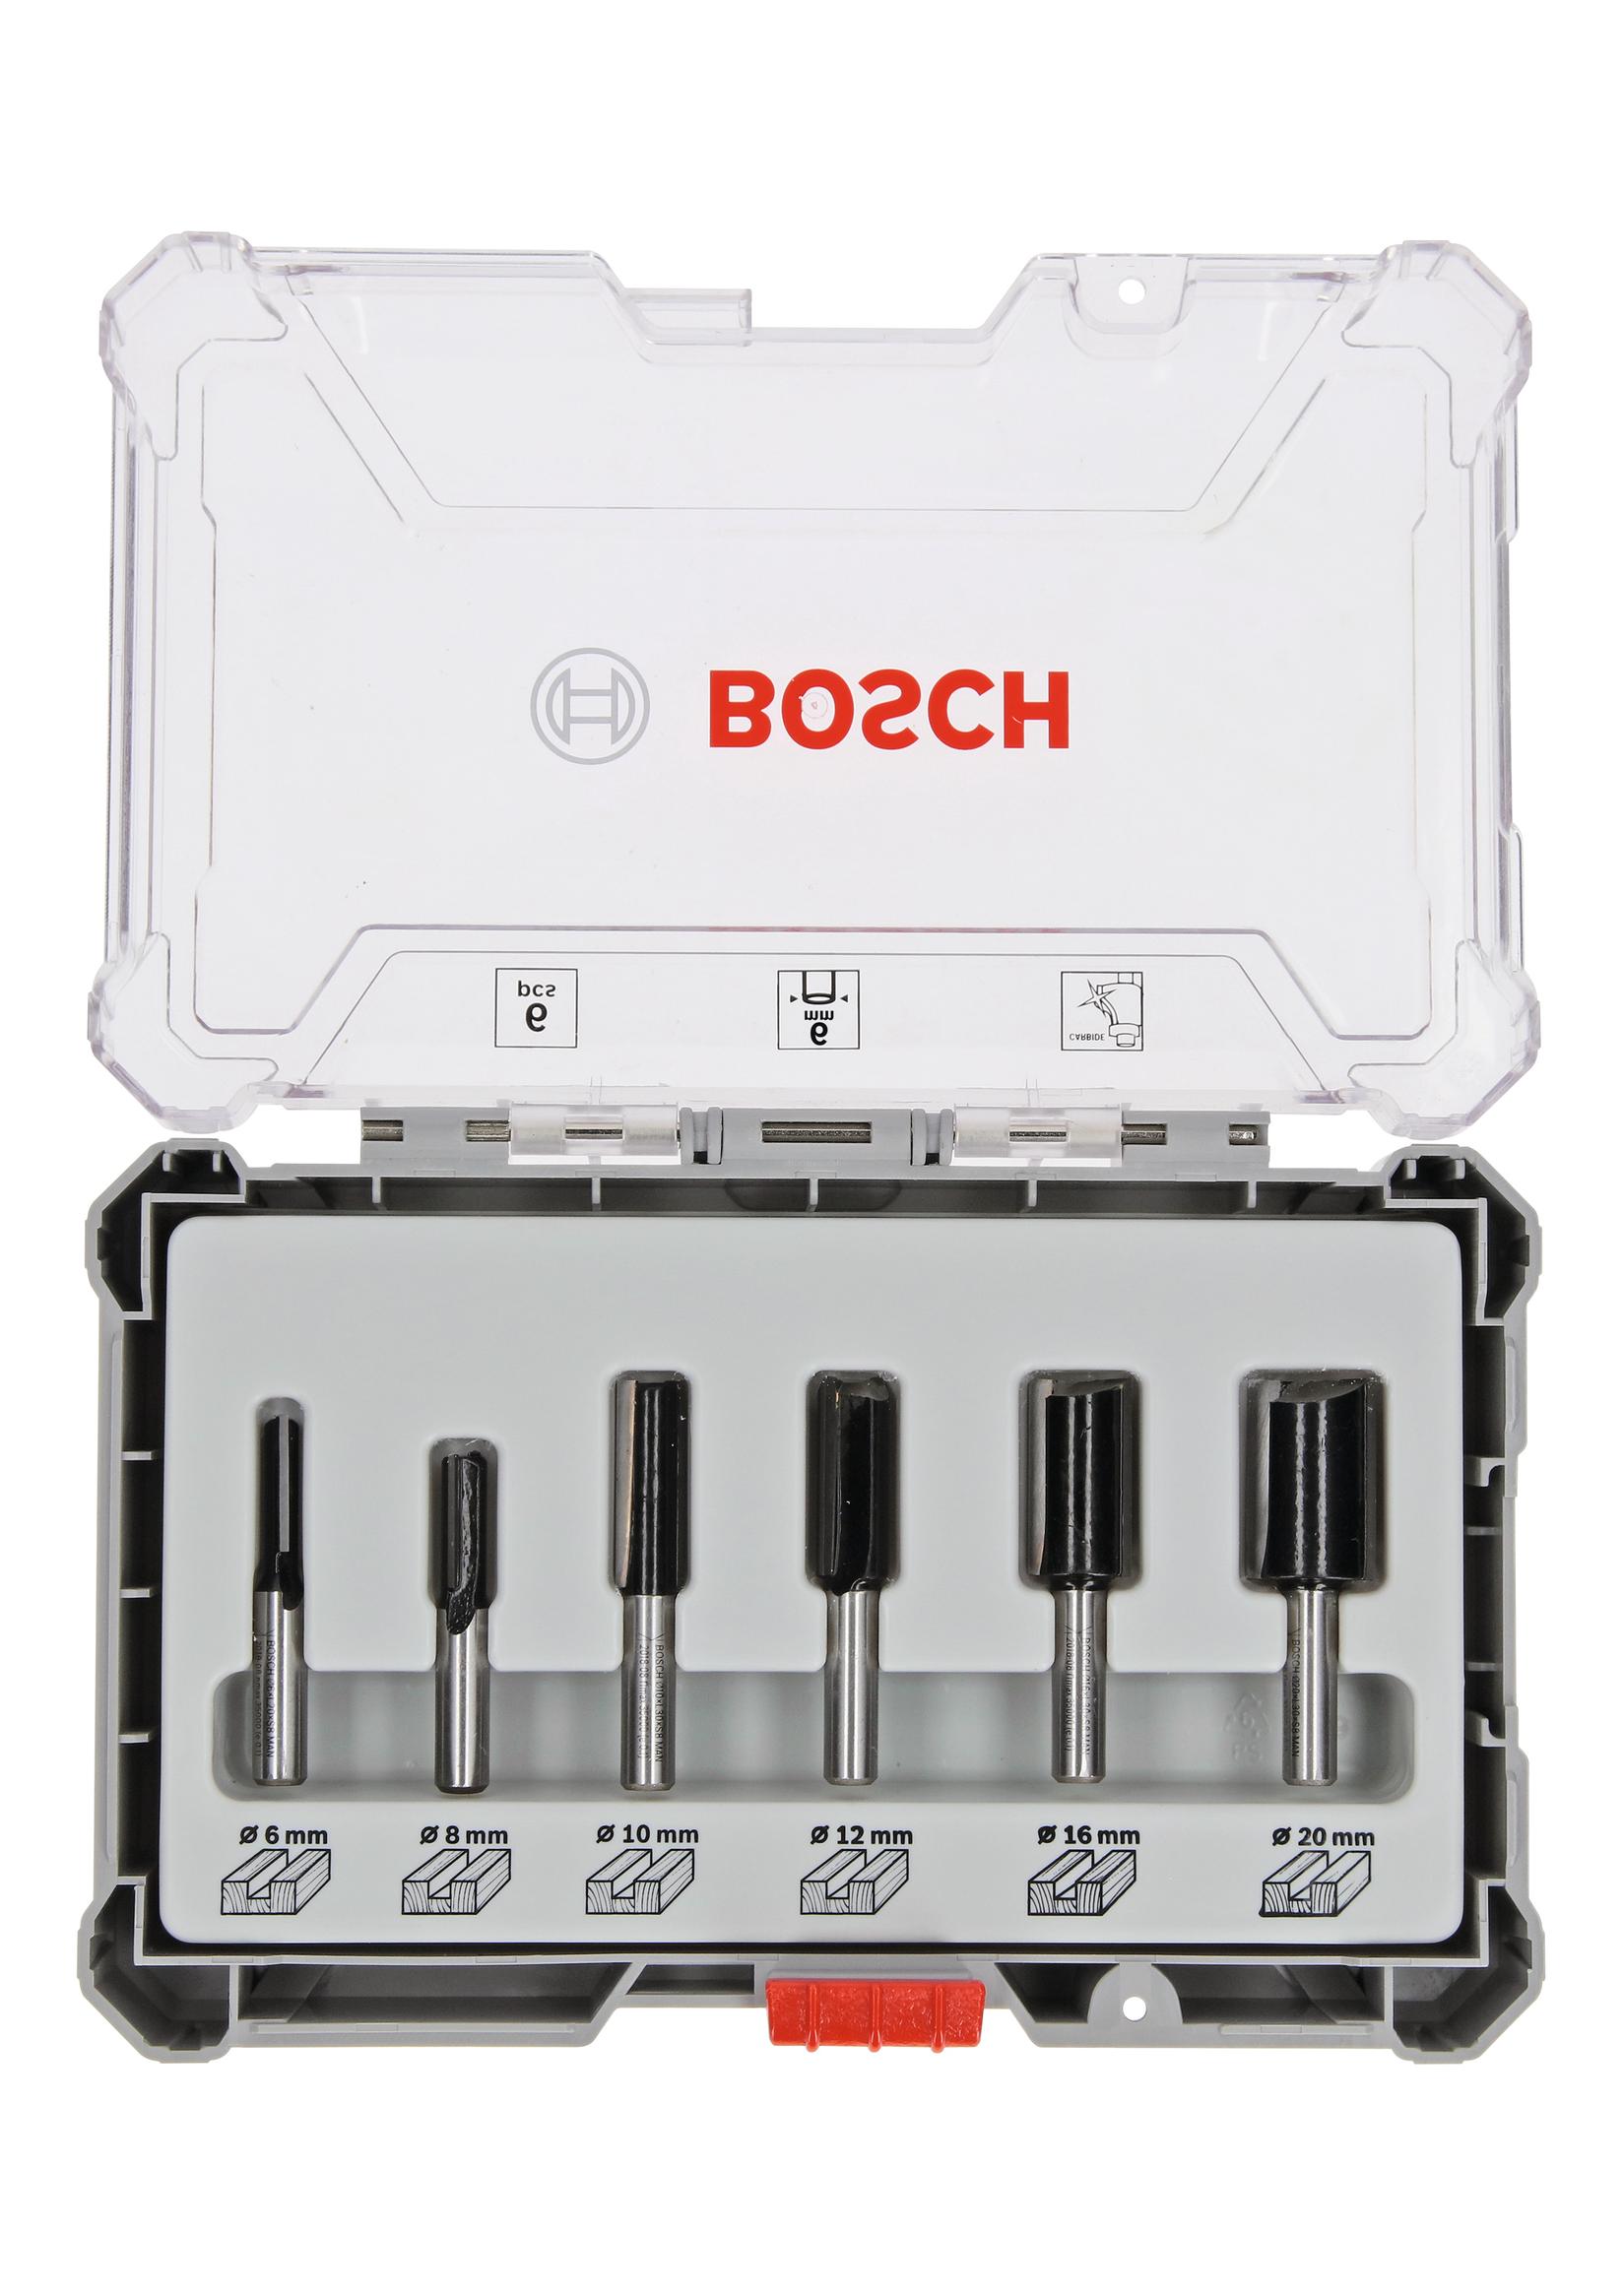 Selected image for Bosch Komplet ravnih glodala, 6 komada, držač od 6 mm 2607017465, 6-piece Straight Router Bit Set.